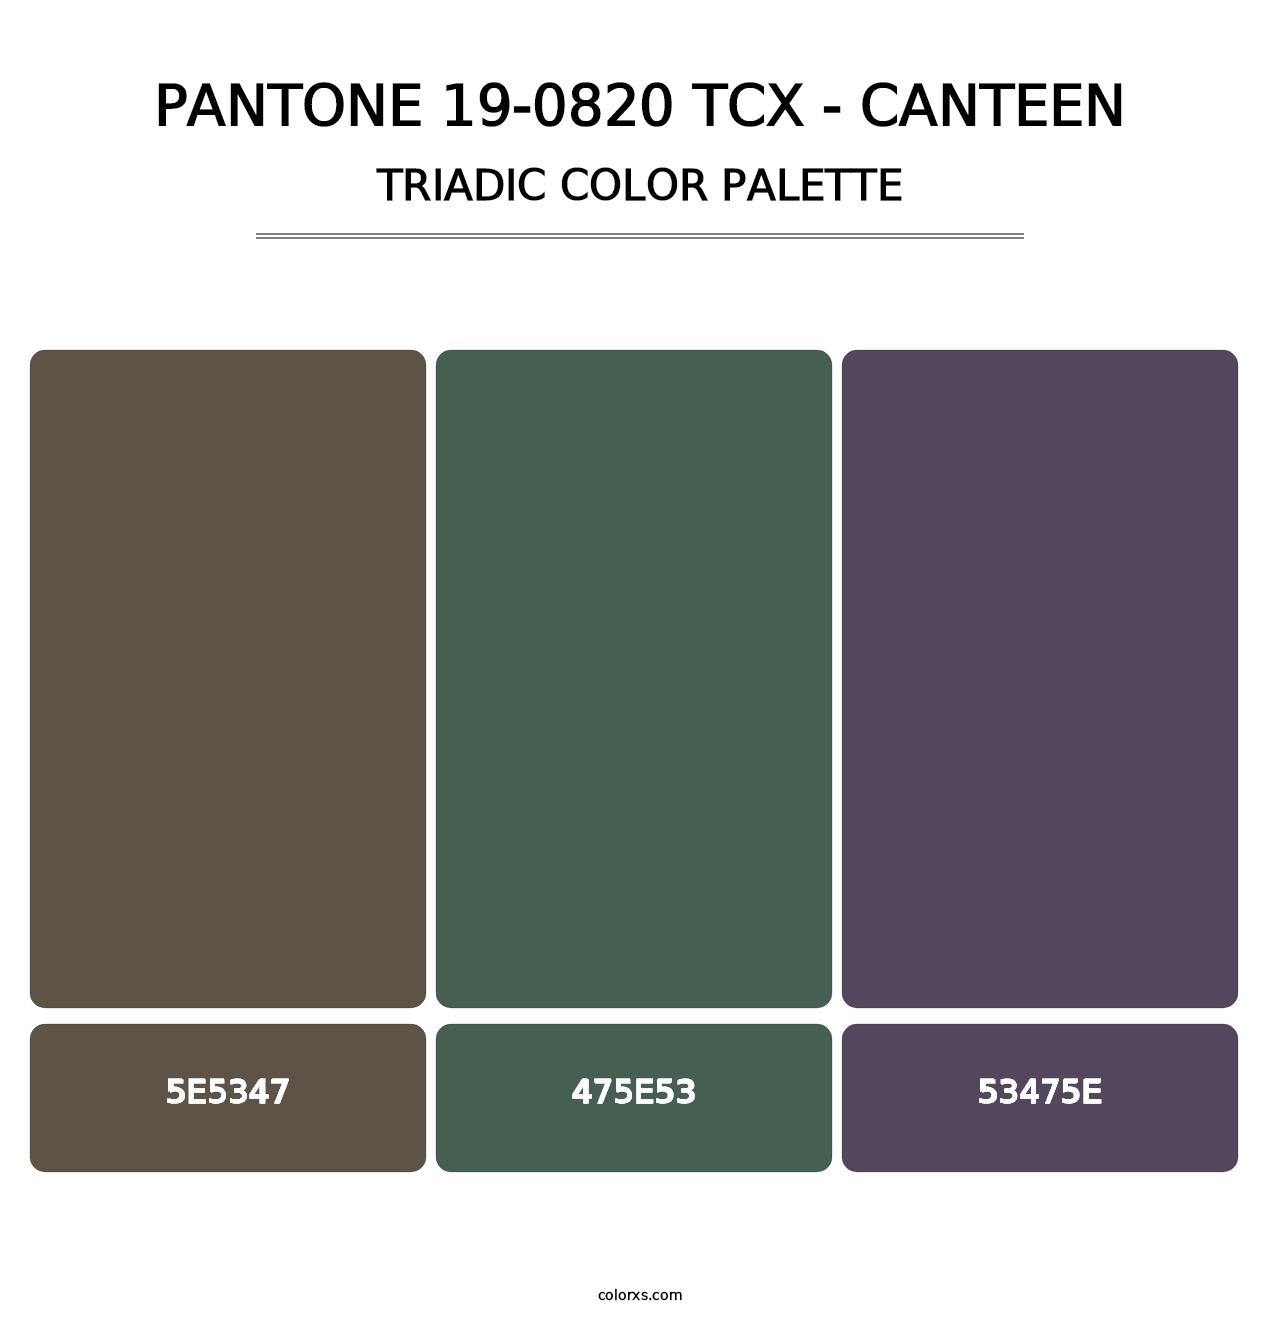 PANTONE 19-0820 TCX - Canteen - Triadic Color Palette